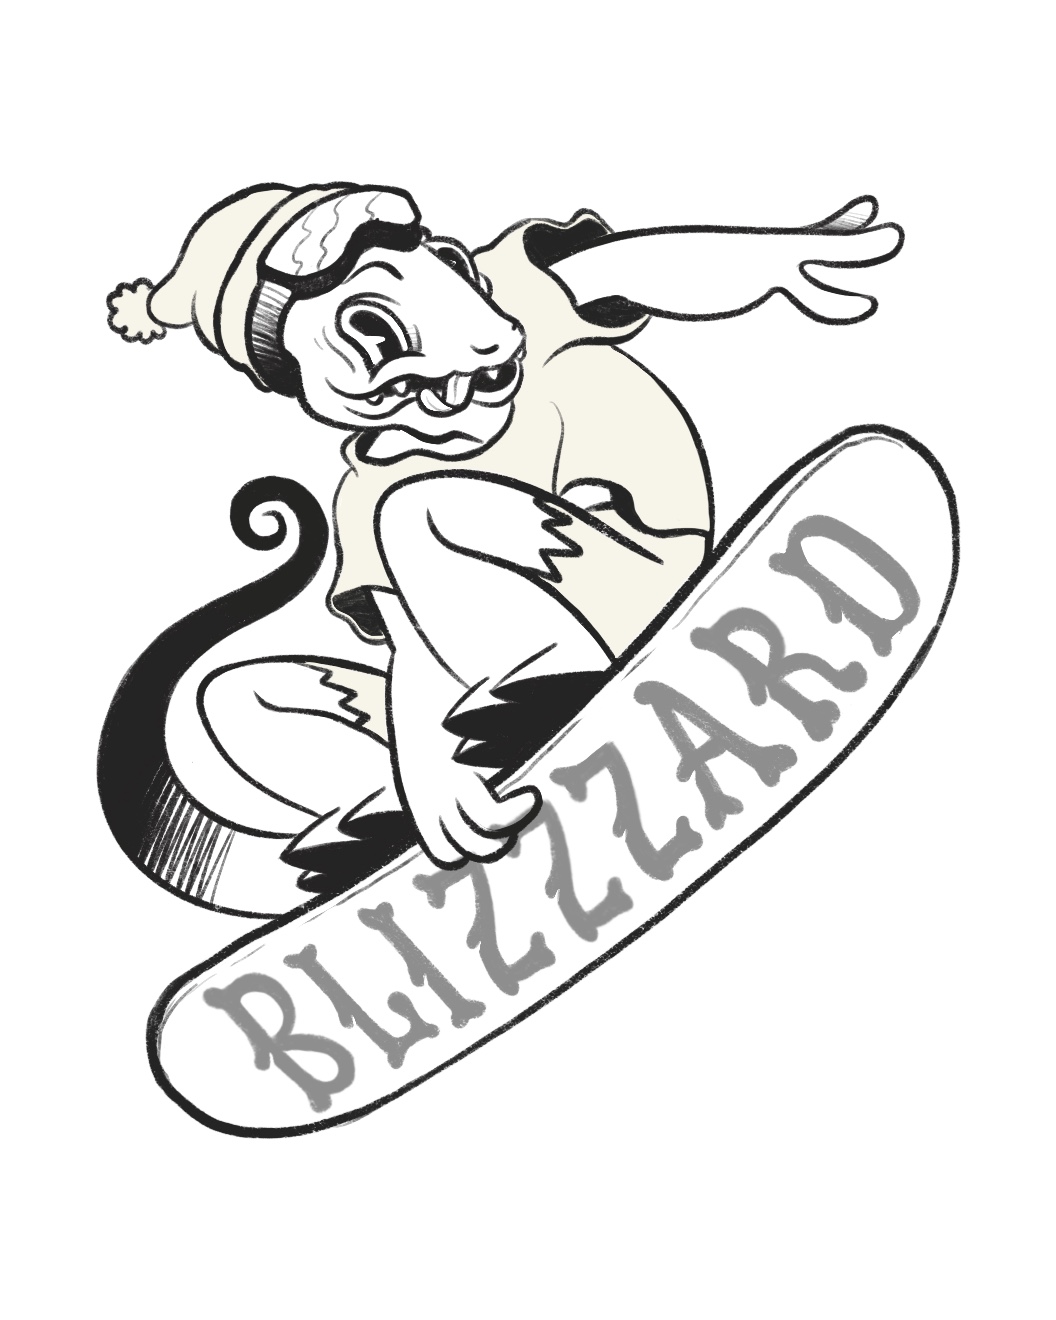 Blizzard_1st_draft-1